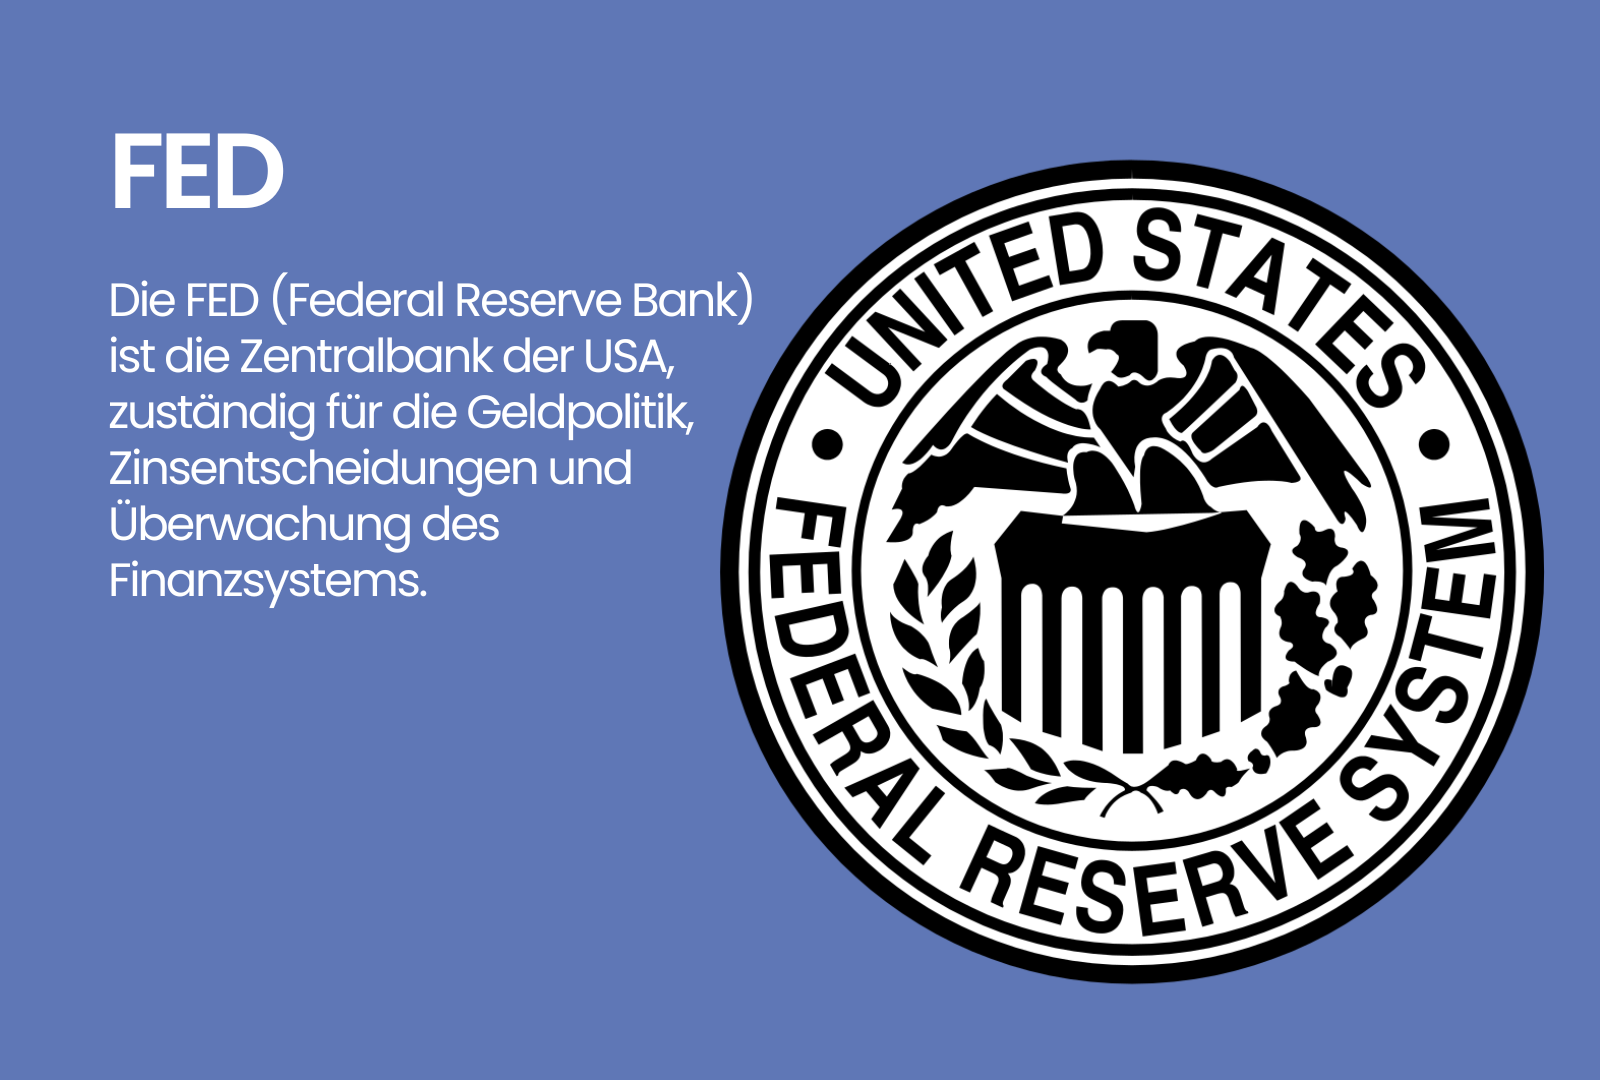 United States Federal Reserve System FED erklärt